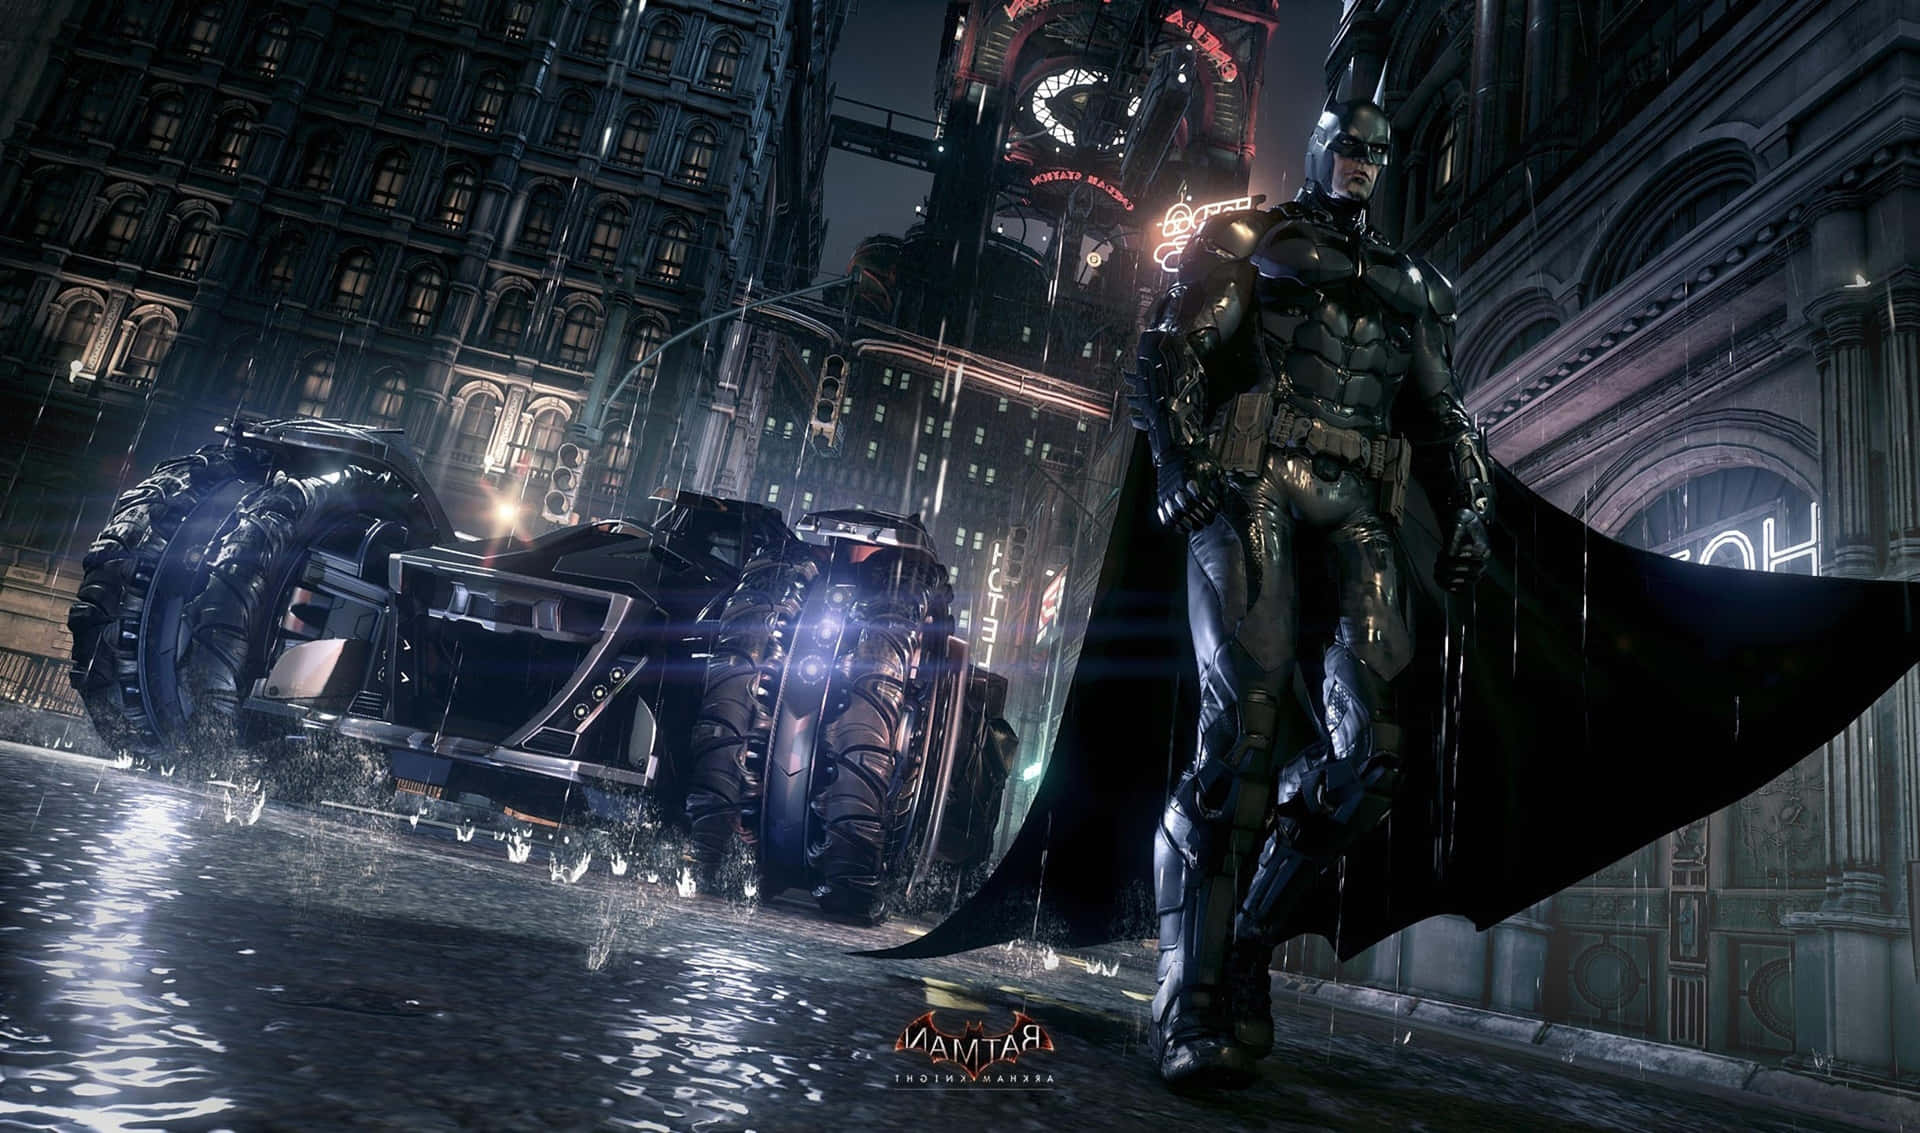 Batmani Arkham City